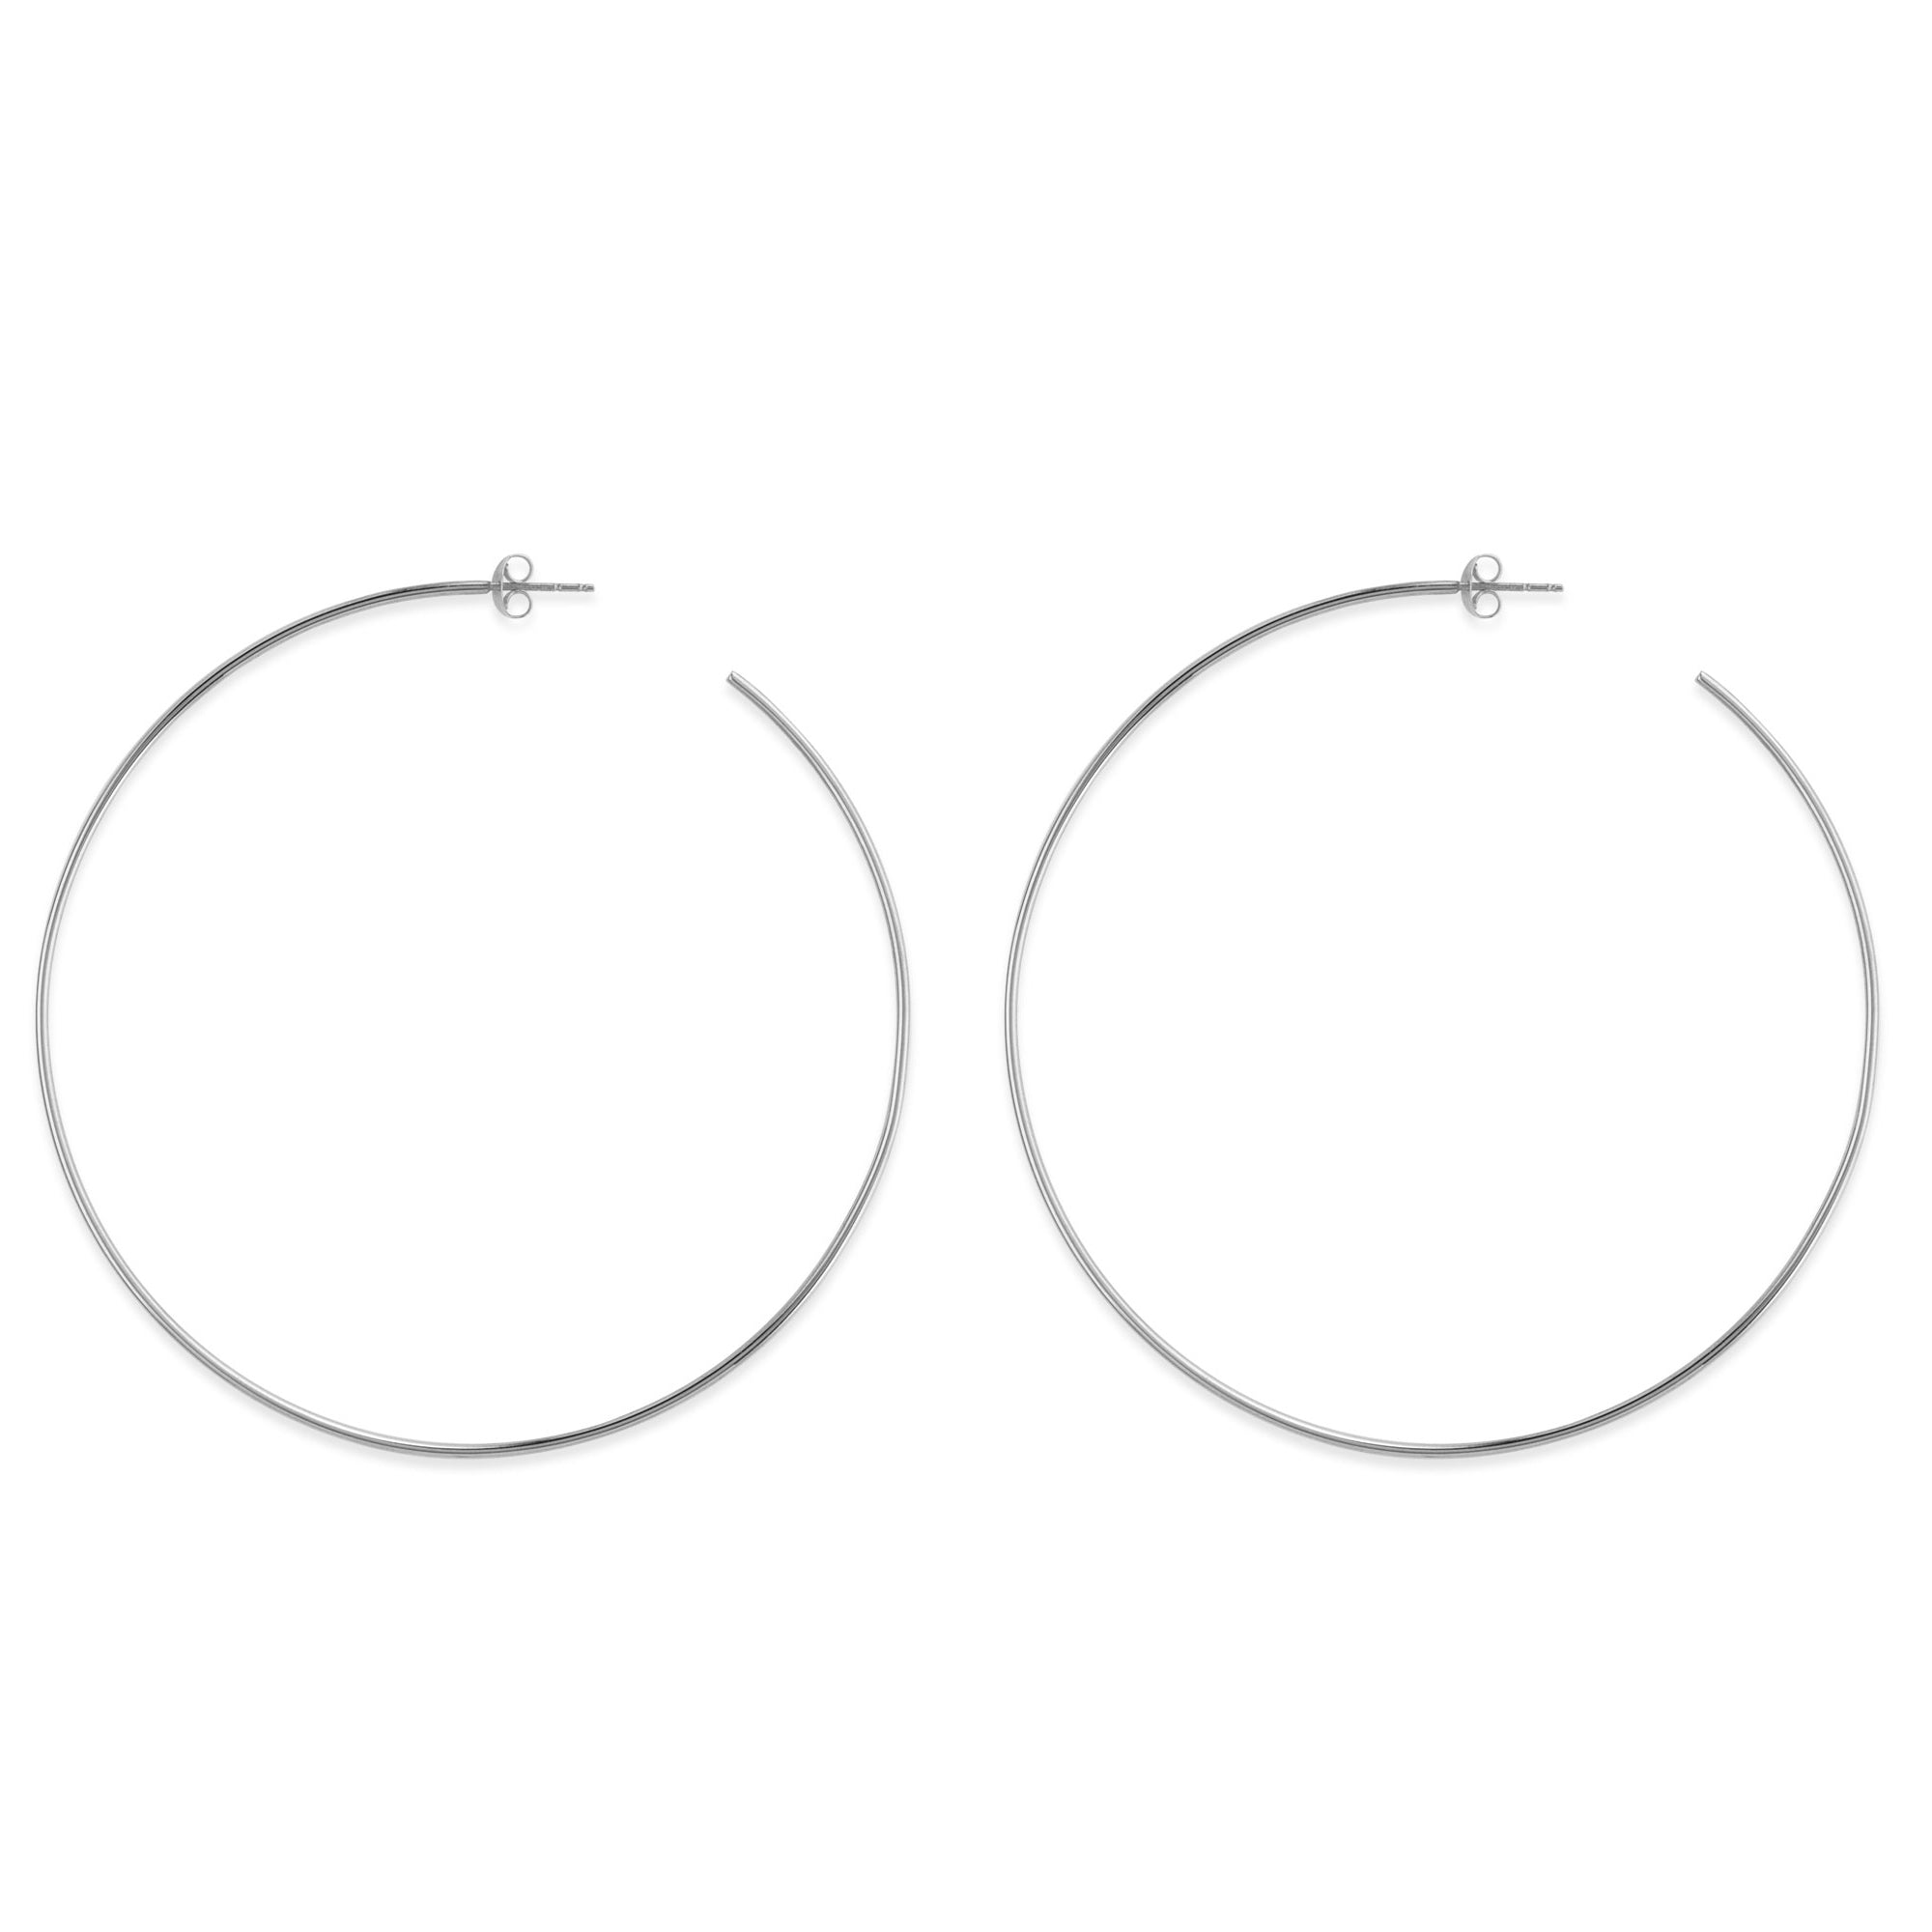 14k Gold Round Large Hoop Earrings, Diameter 90 mm fine designer jewelry for men and women